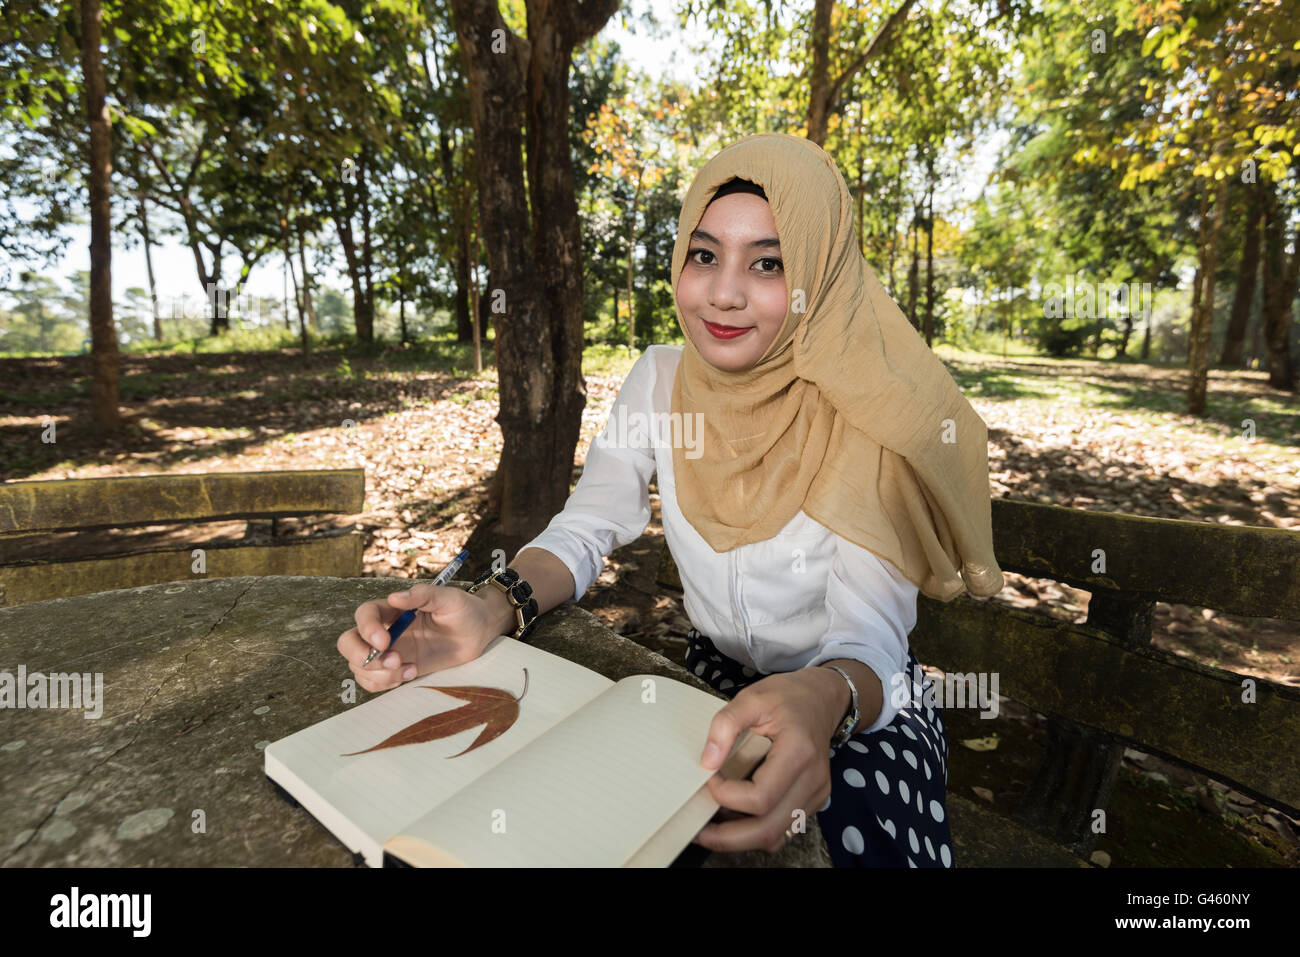 islam woman write diary Stock Photo